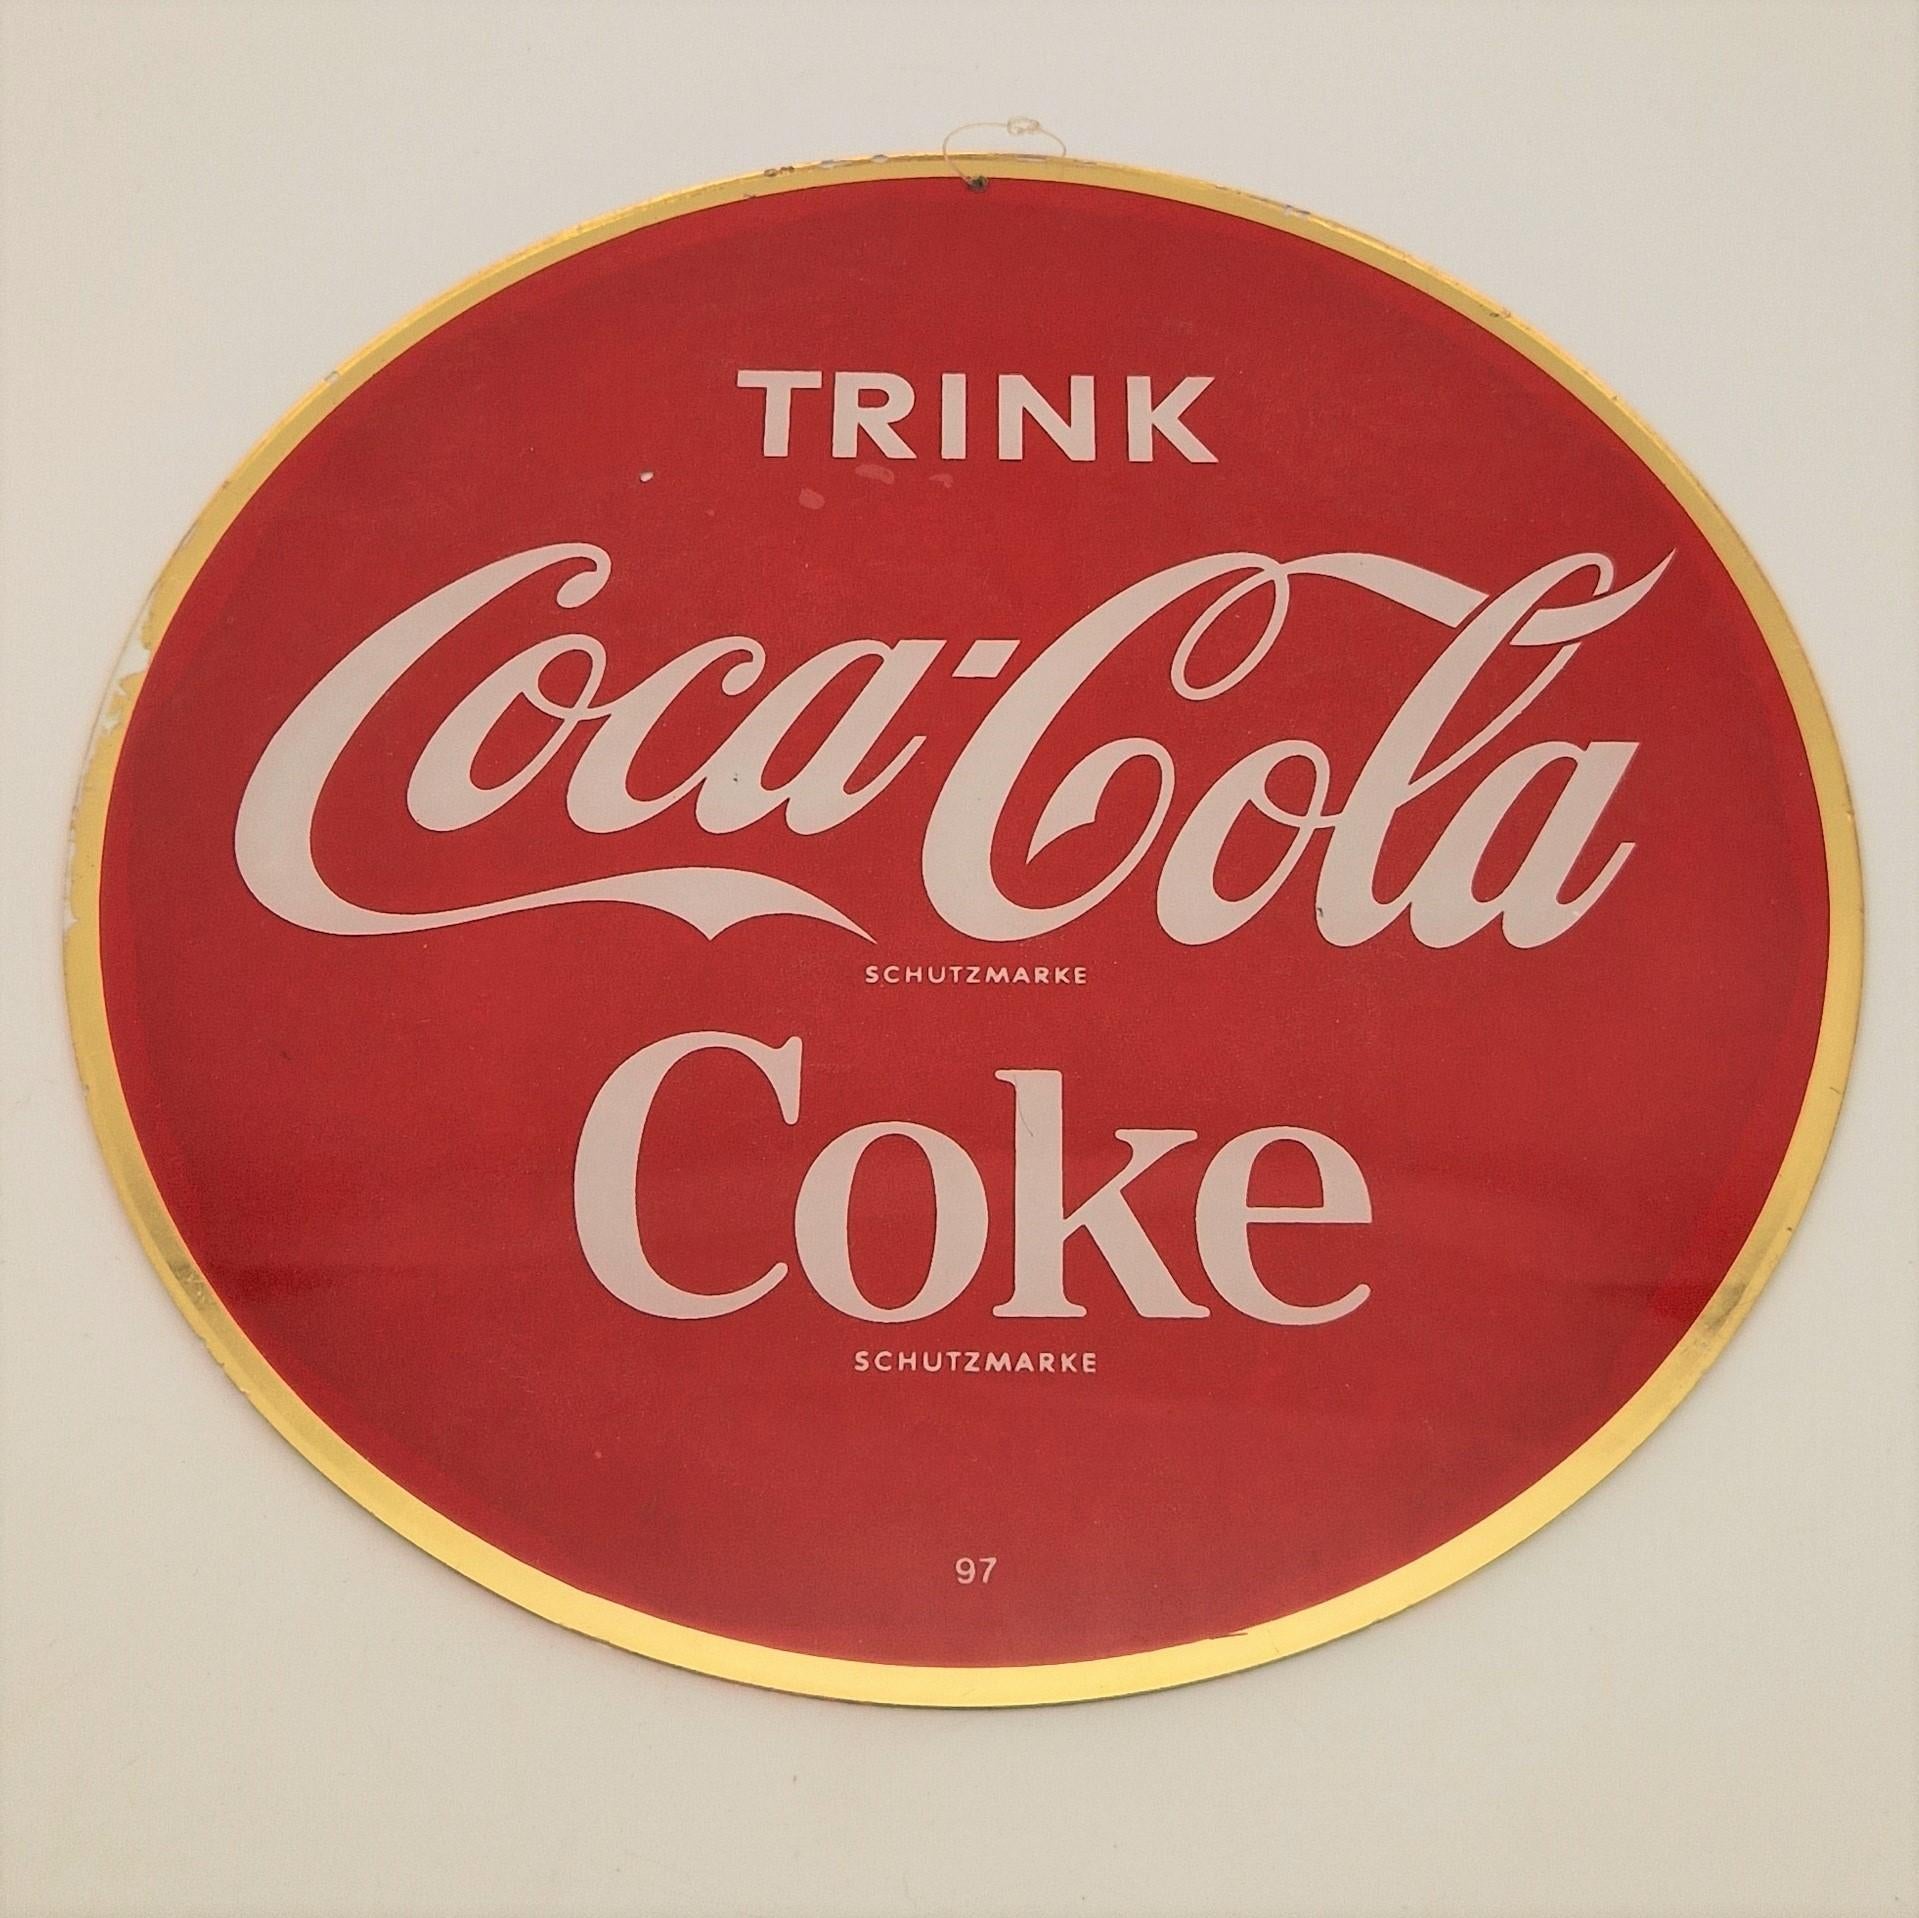 Allemand Panneau publicitaire en verre « Drink Coca Cola - Coke », 1950 - 1959 en vente